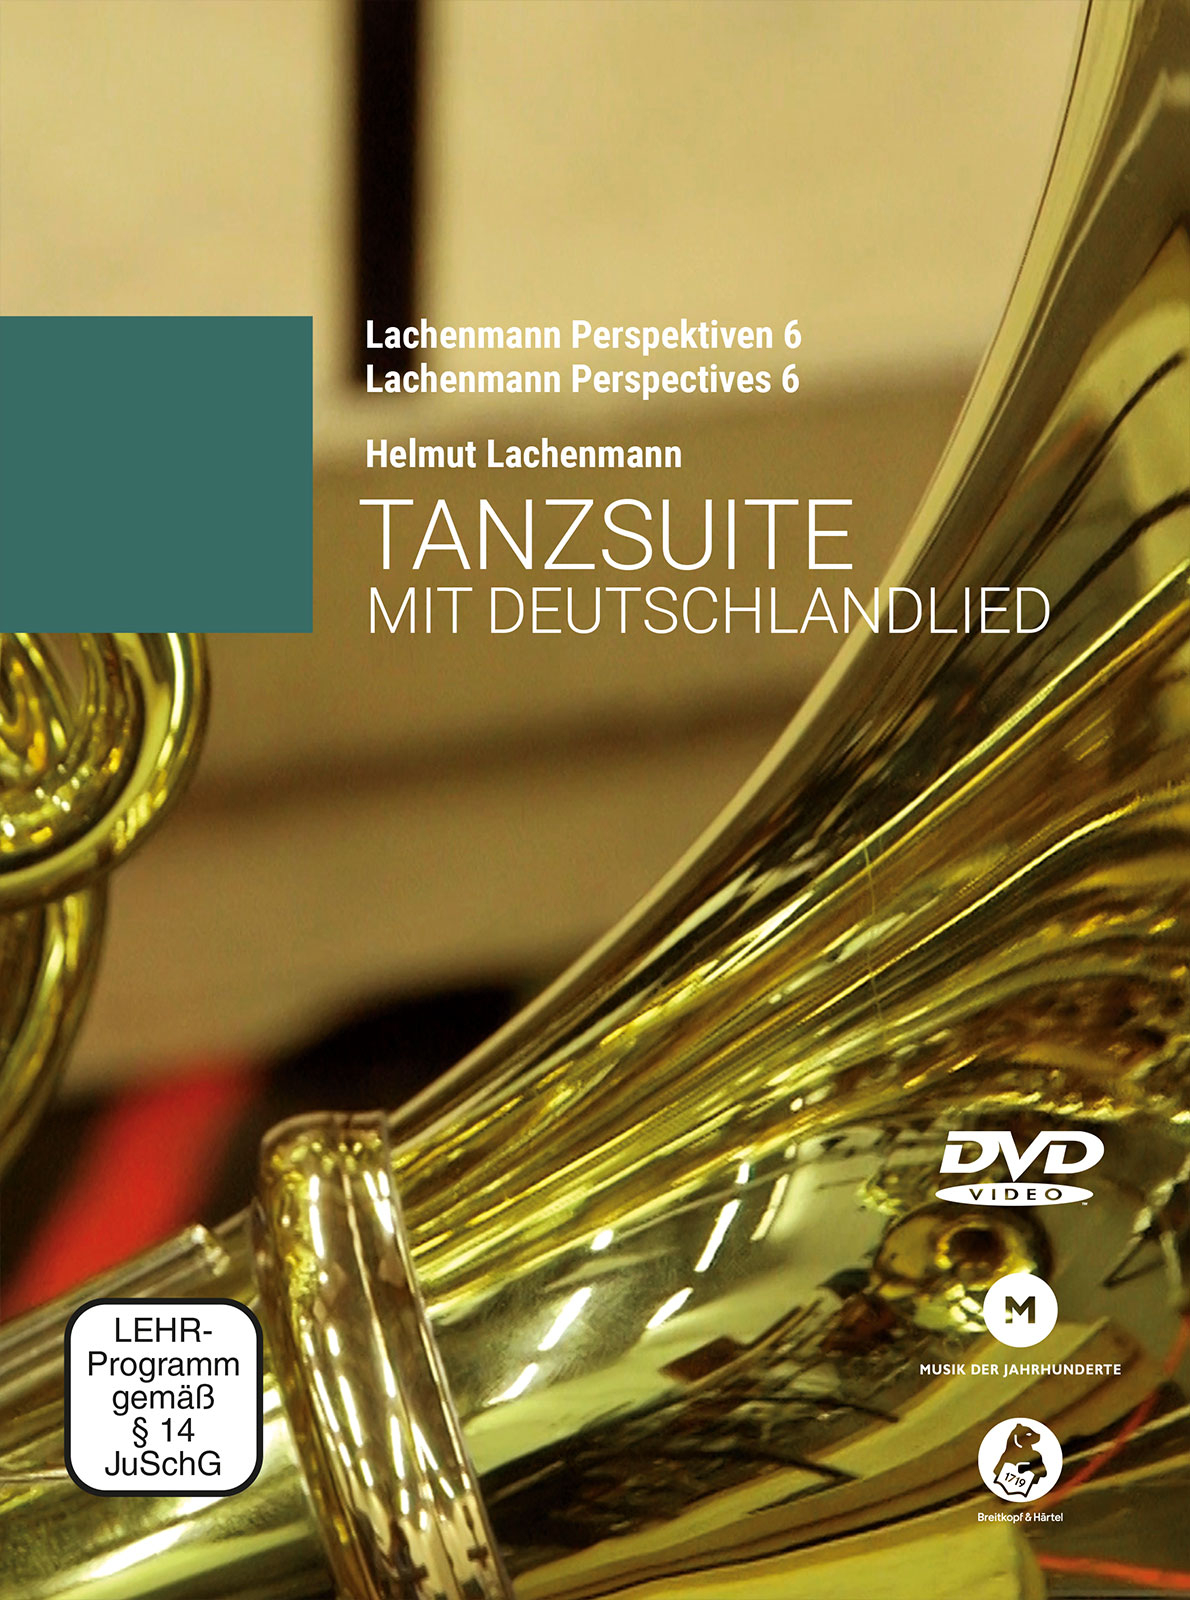 Helmut Lachenmann: Lachenmann Perspectives: DVD